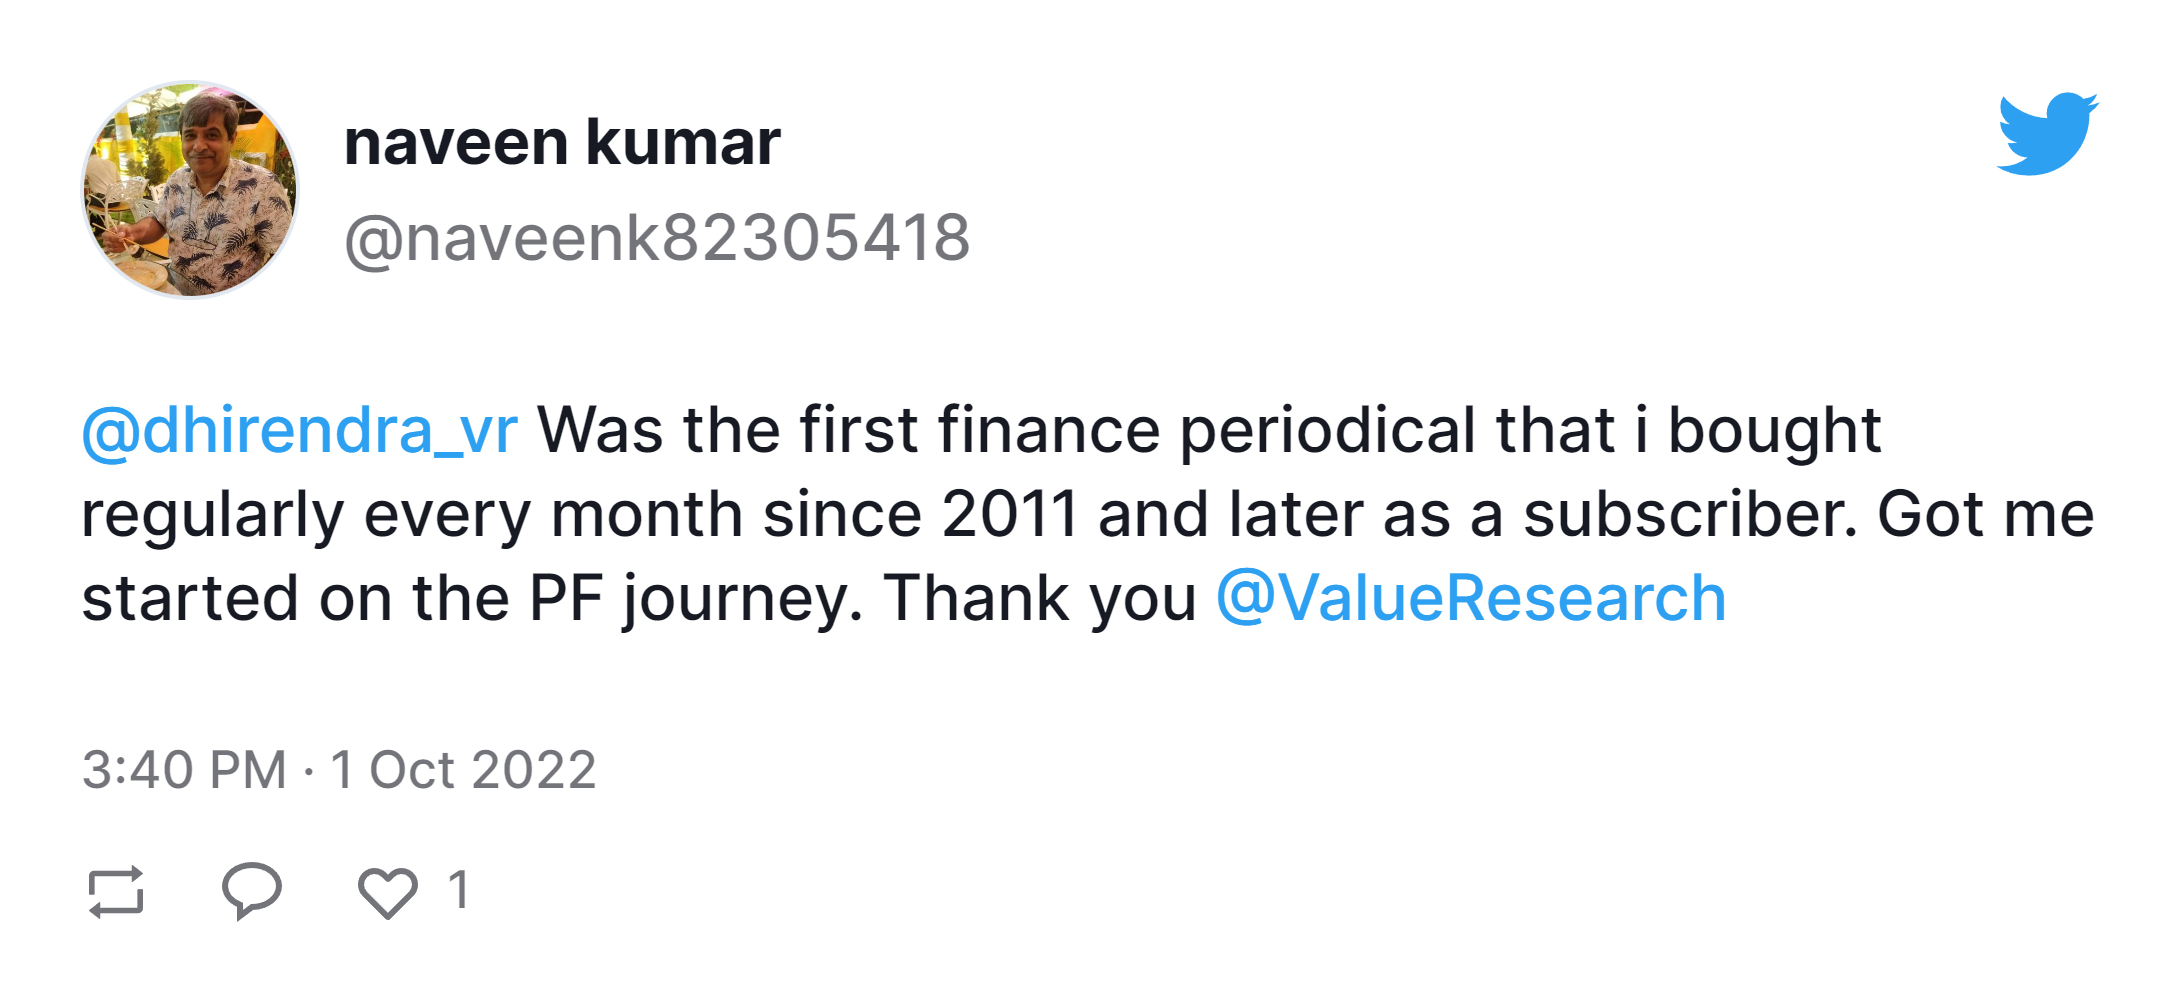 naveen kumar twitter post about value research